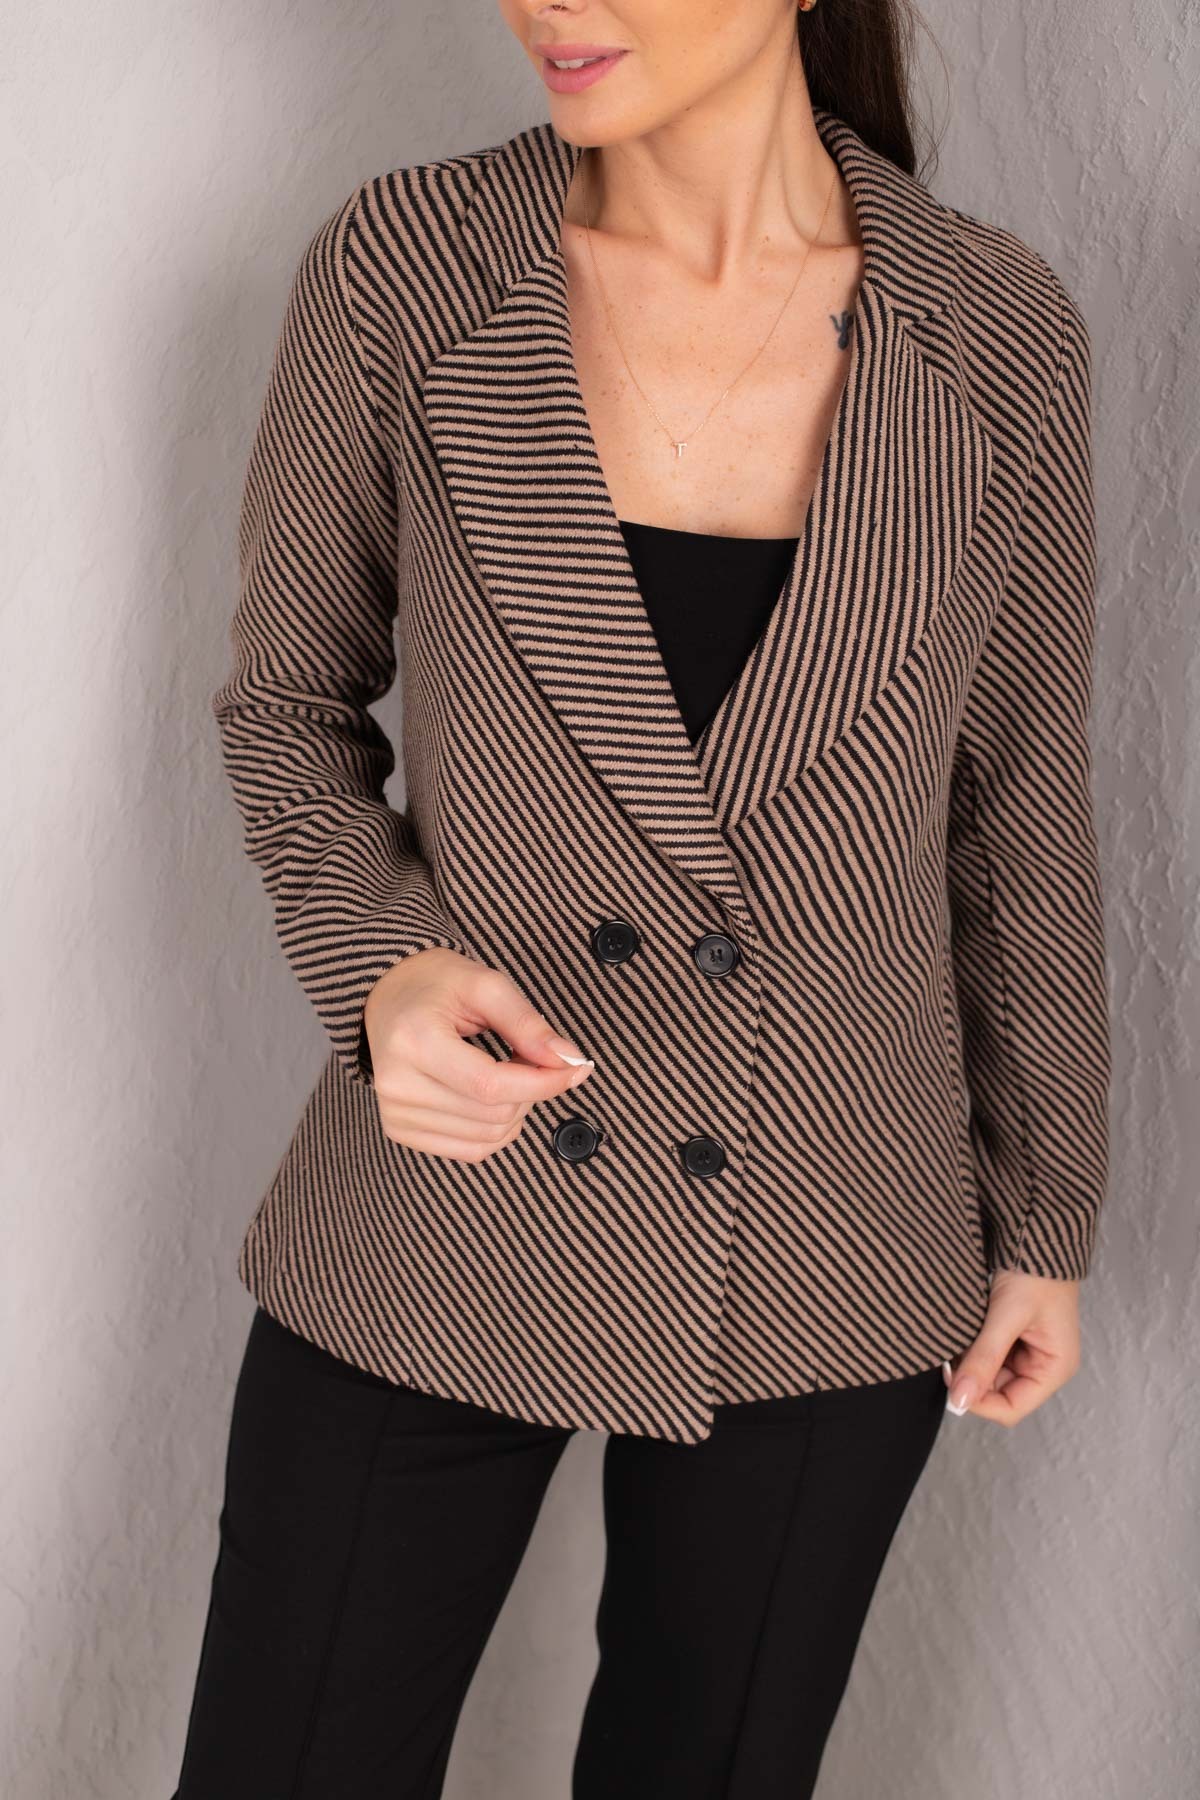 armonika Women's Mink Stripe Patterned Four Button Cachet Jacket